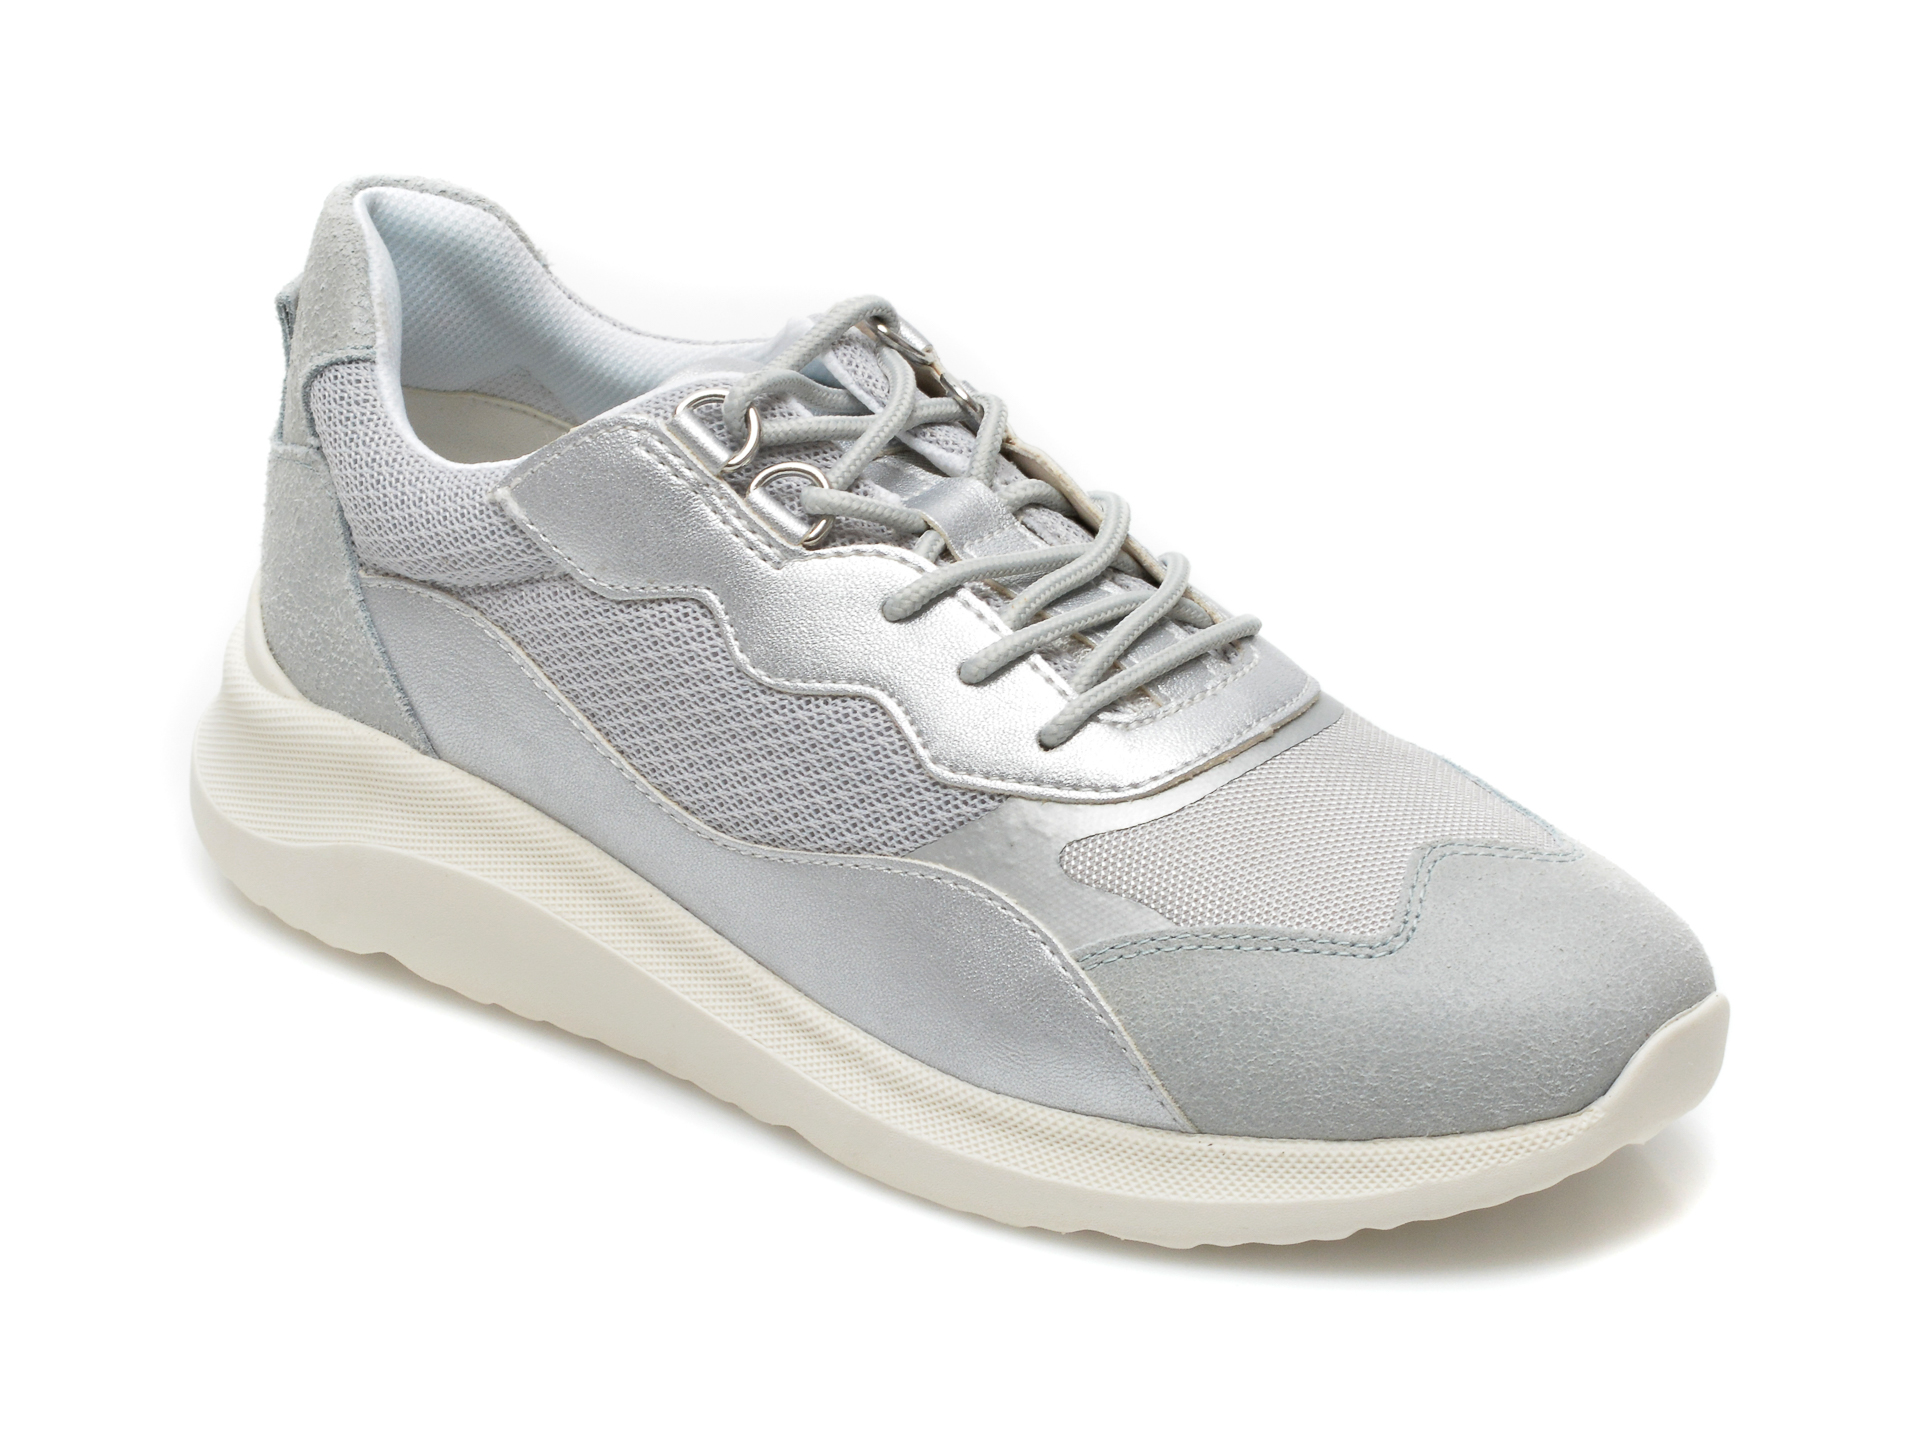 Pantofi sport GEOX argintii, D15NXG, din material textil si piele naturala Geox Geox